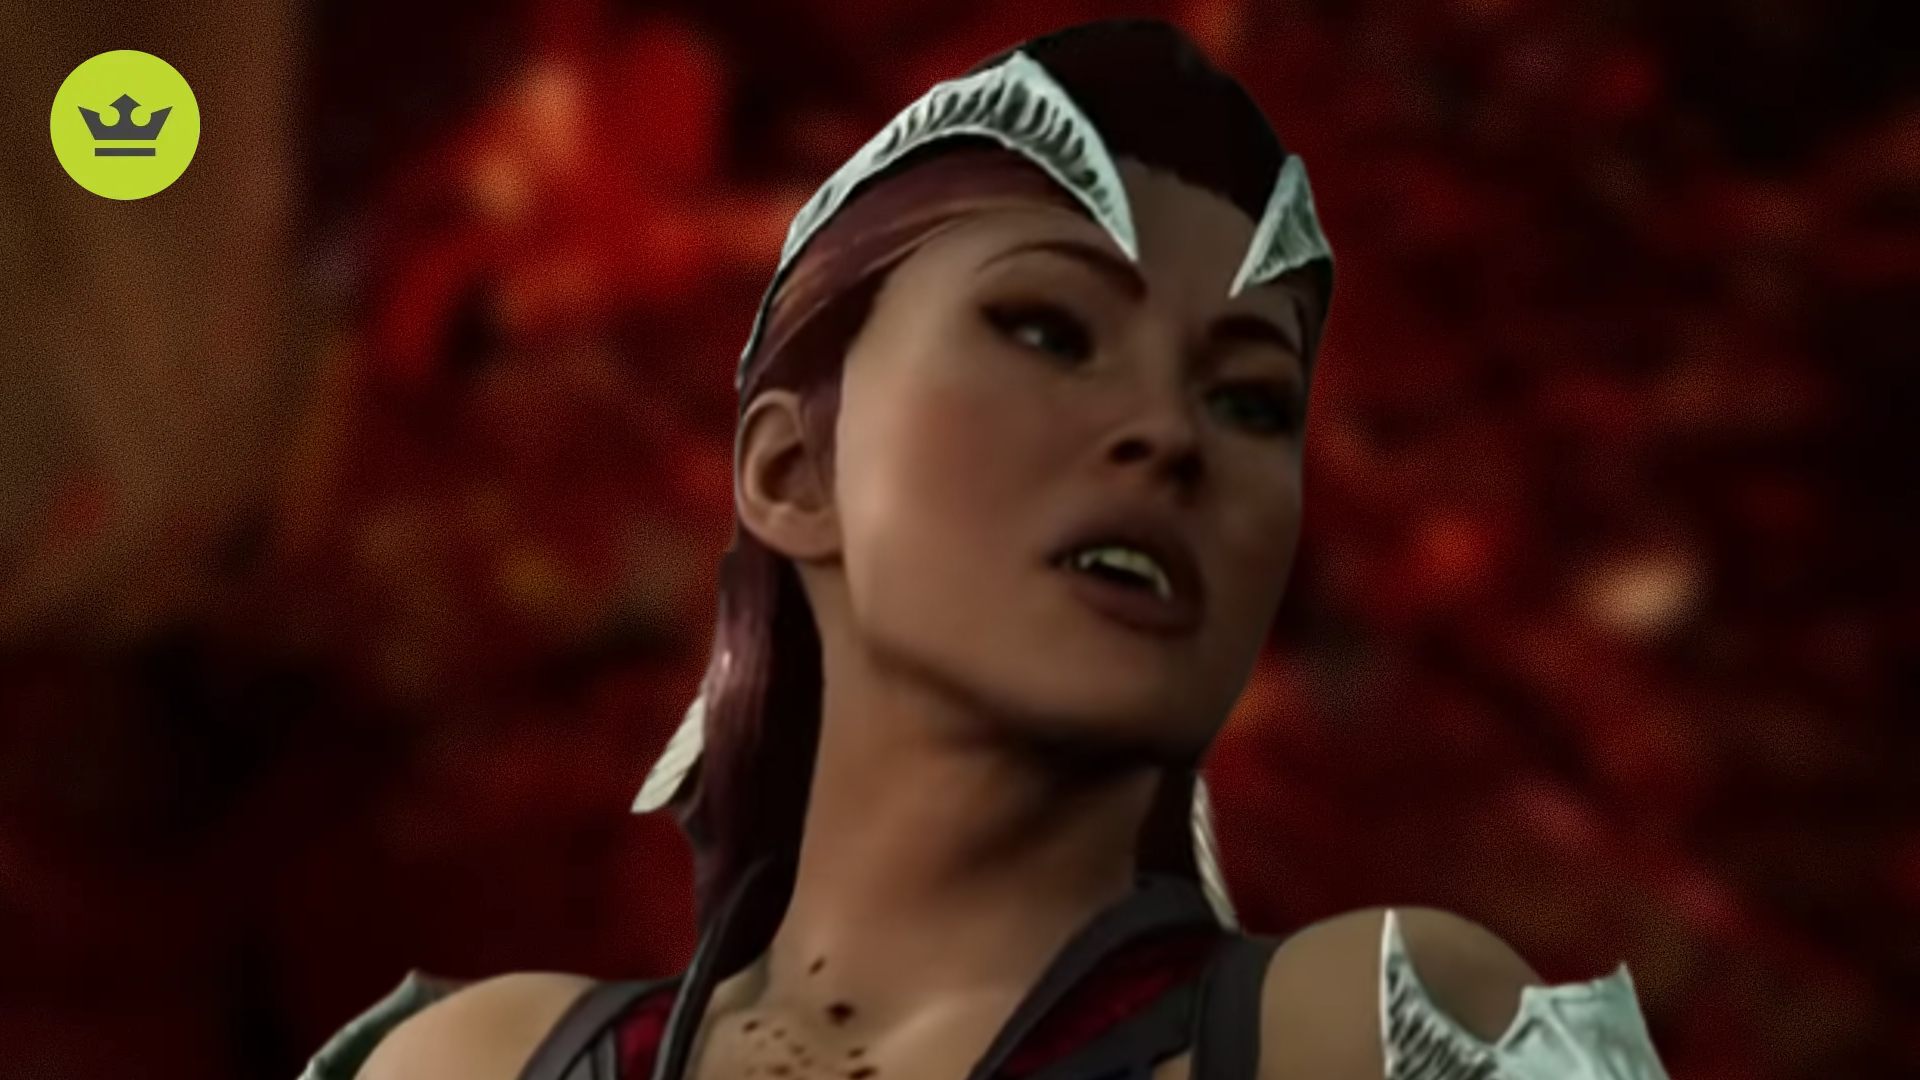 Mortal Kombat 1 characters: Nitara can be seen